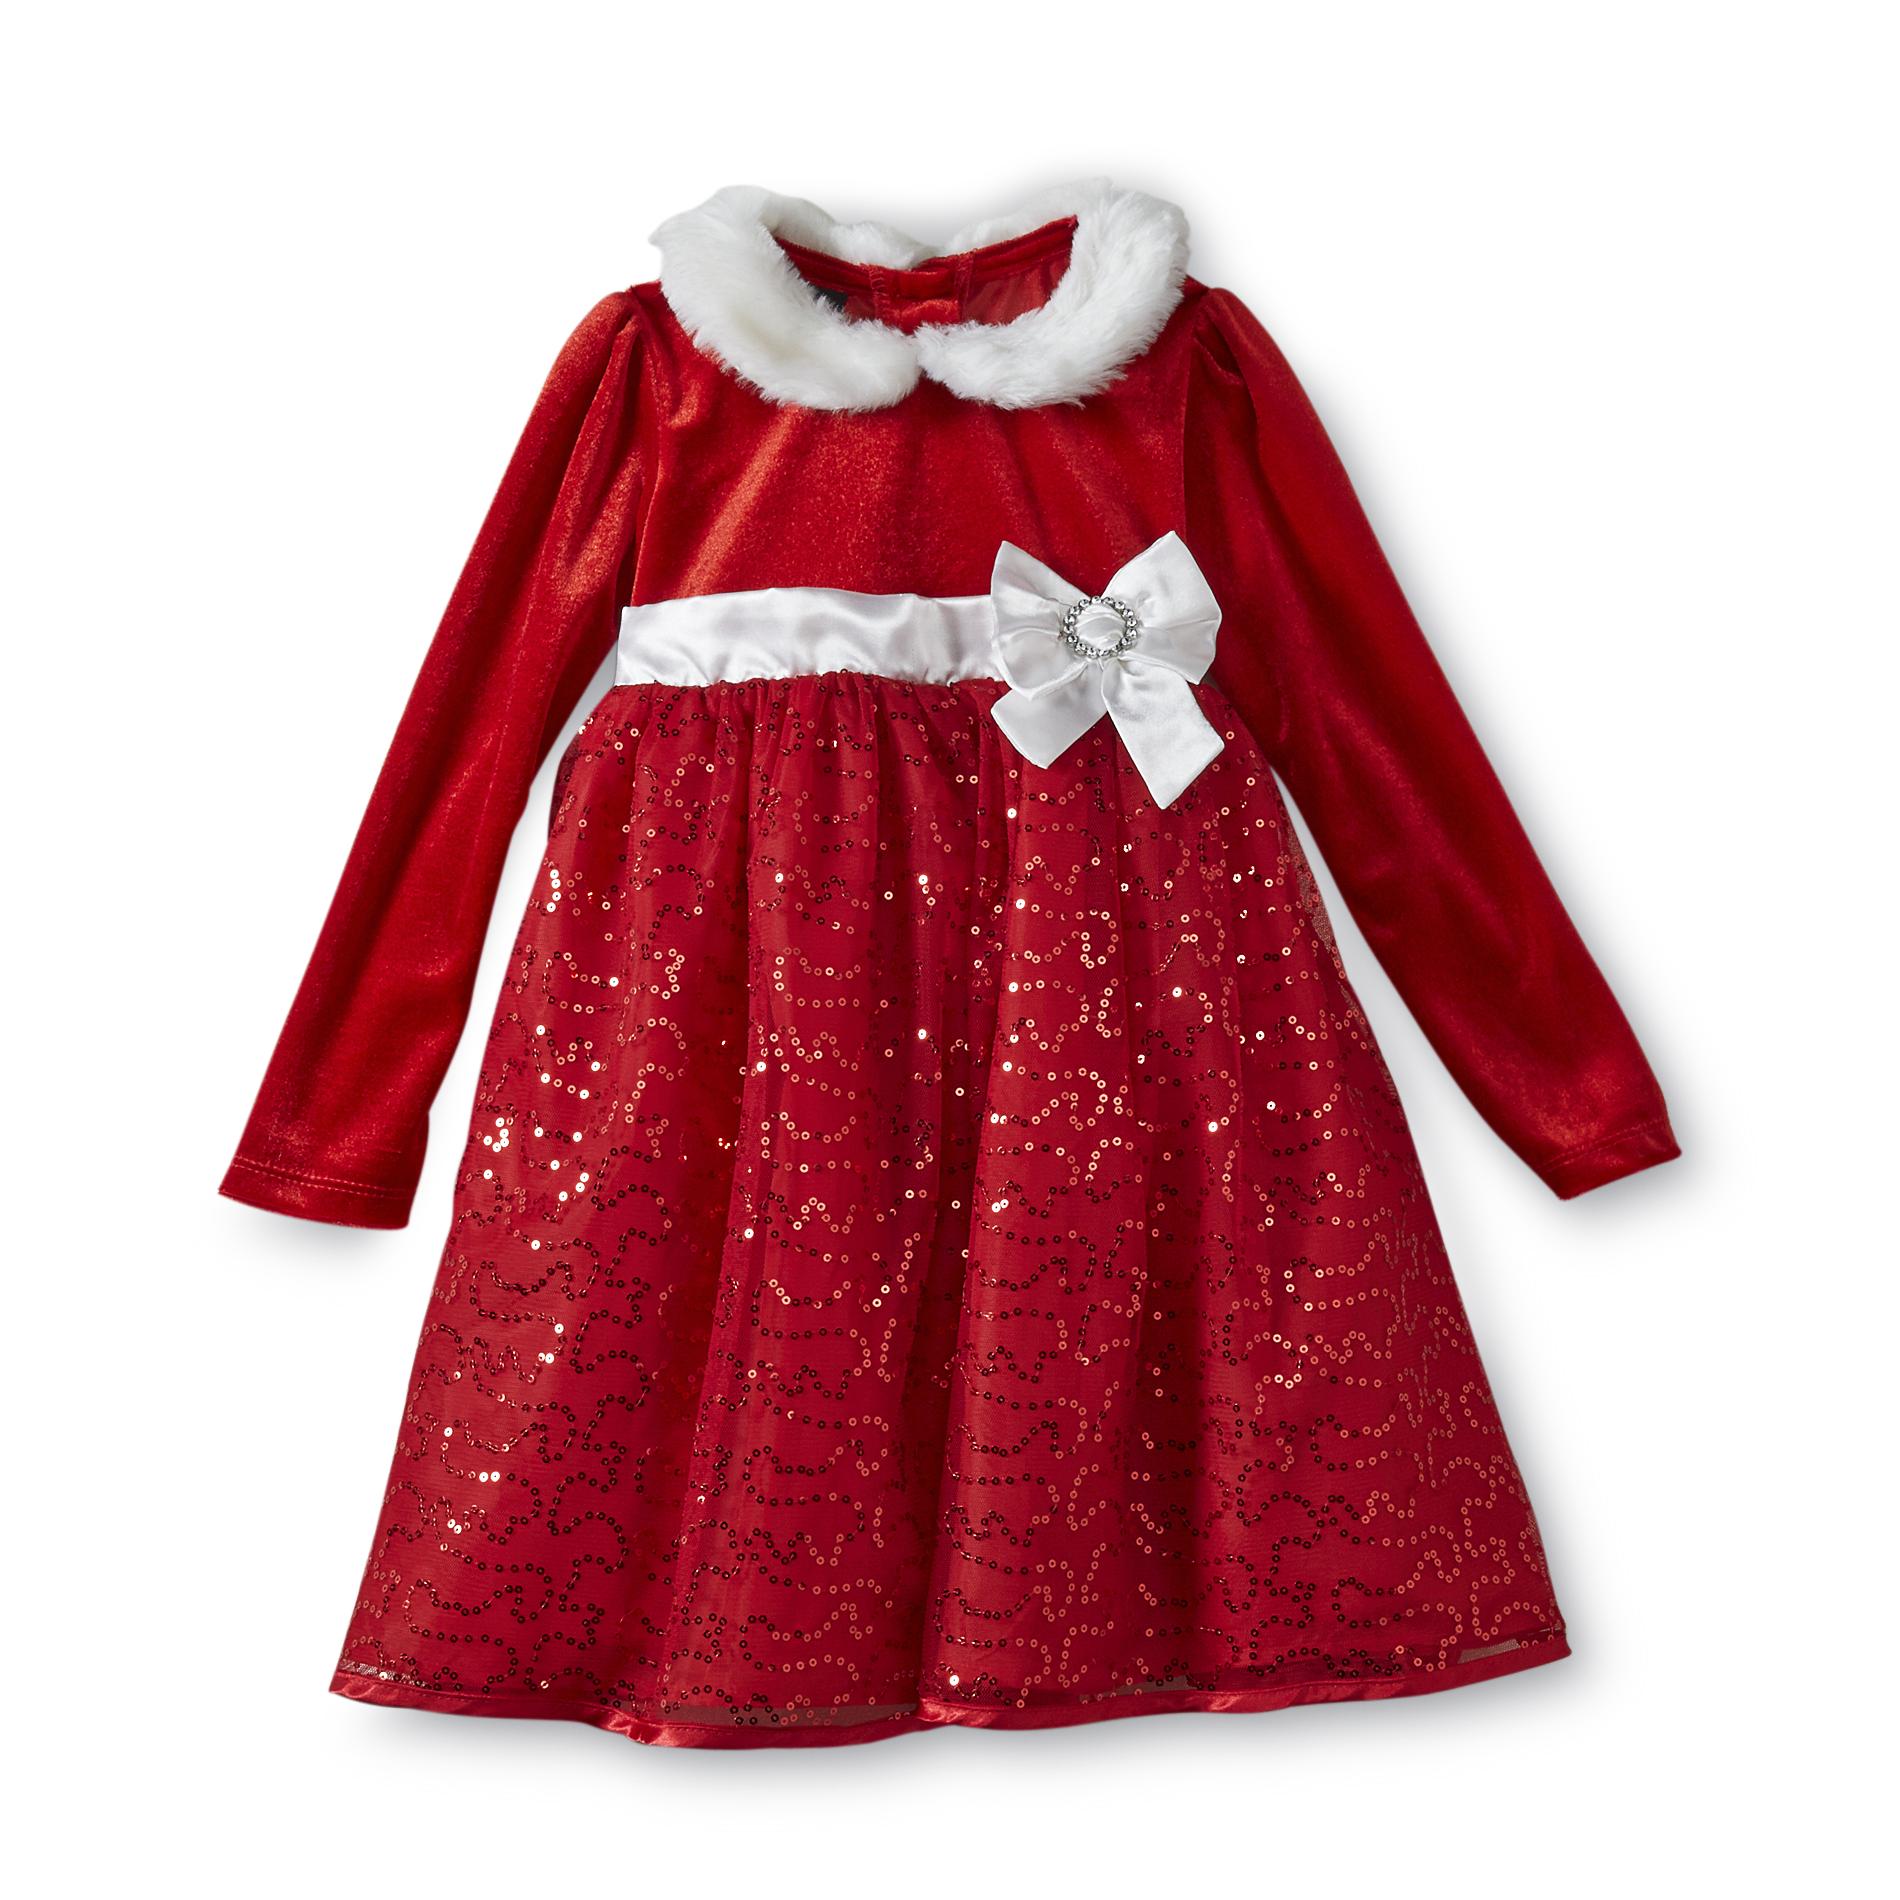 Holiday Editions Toddler Girl's Christmas Dress